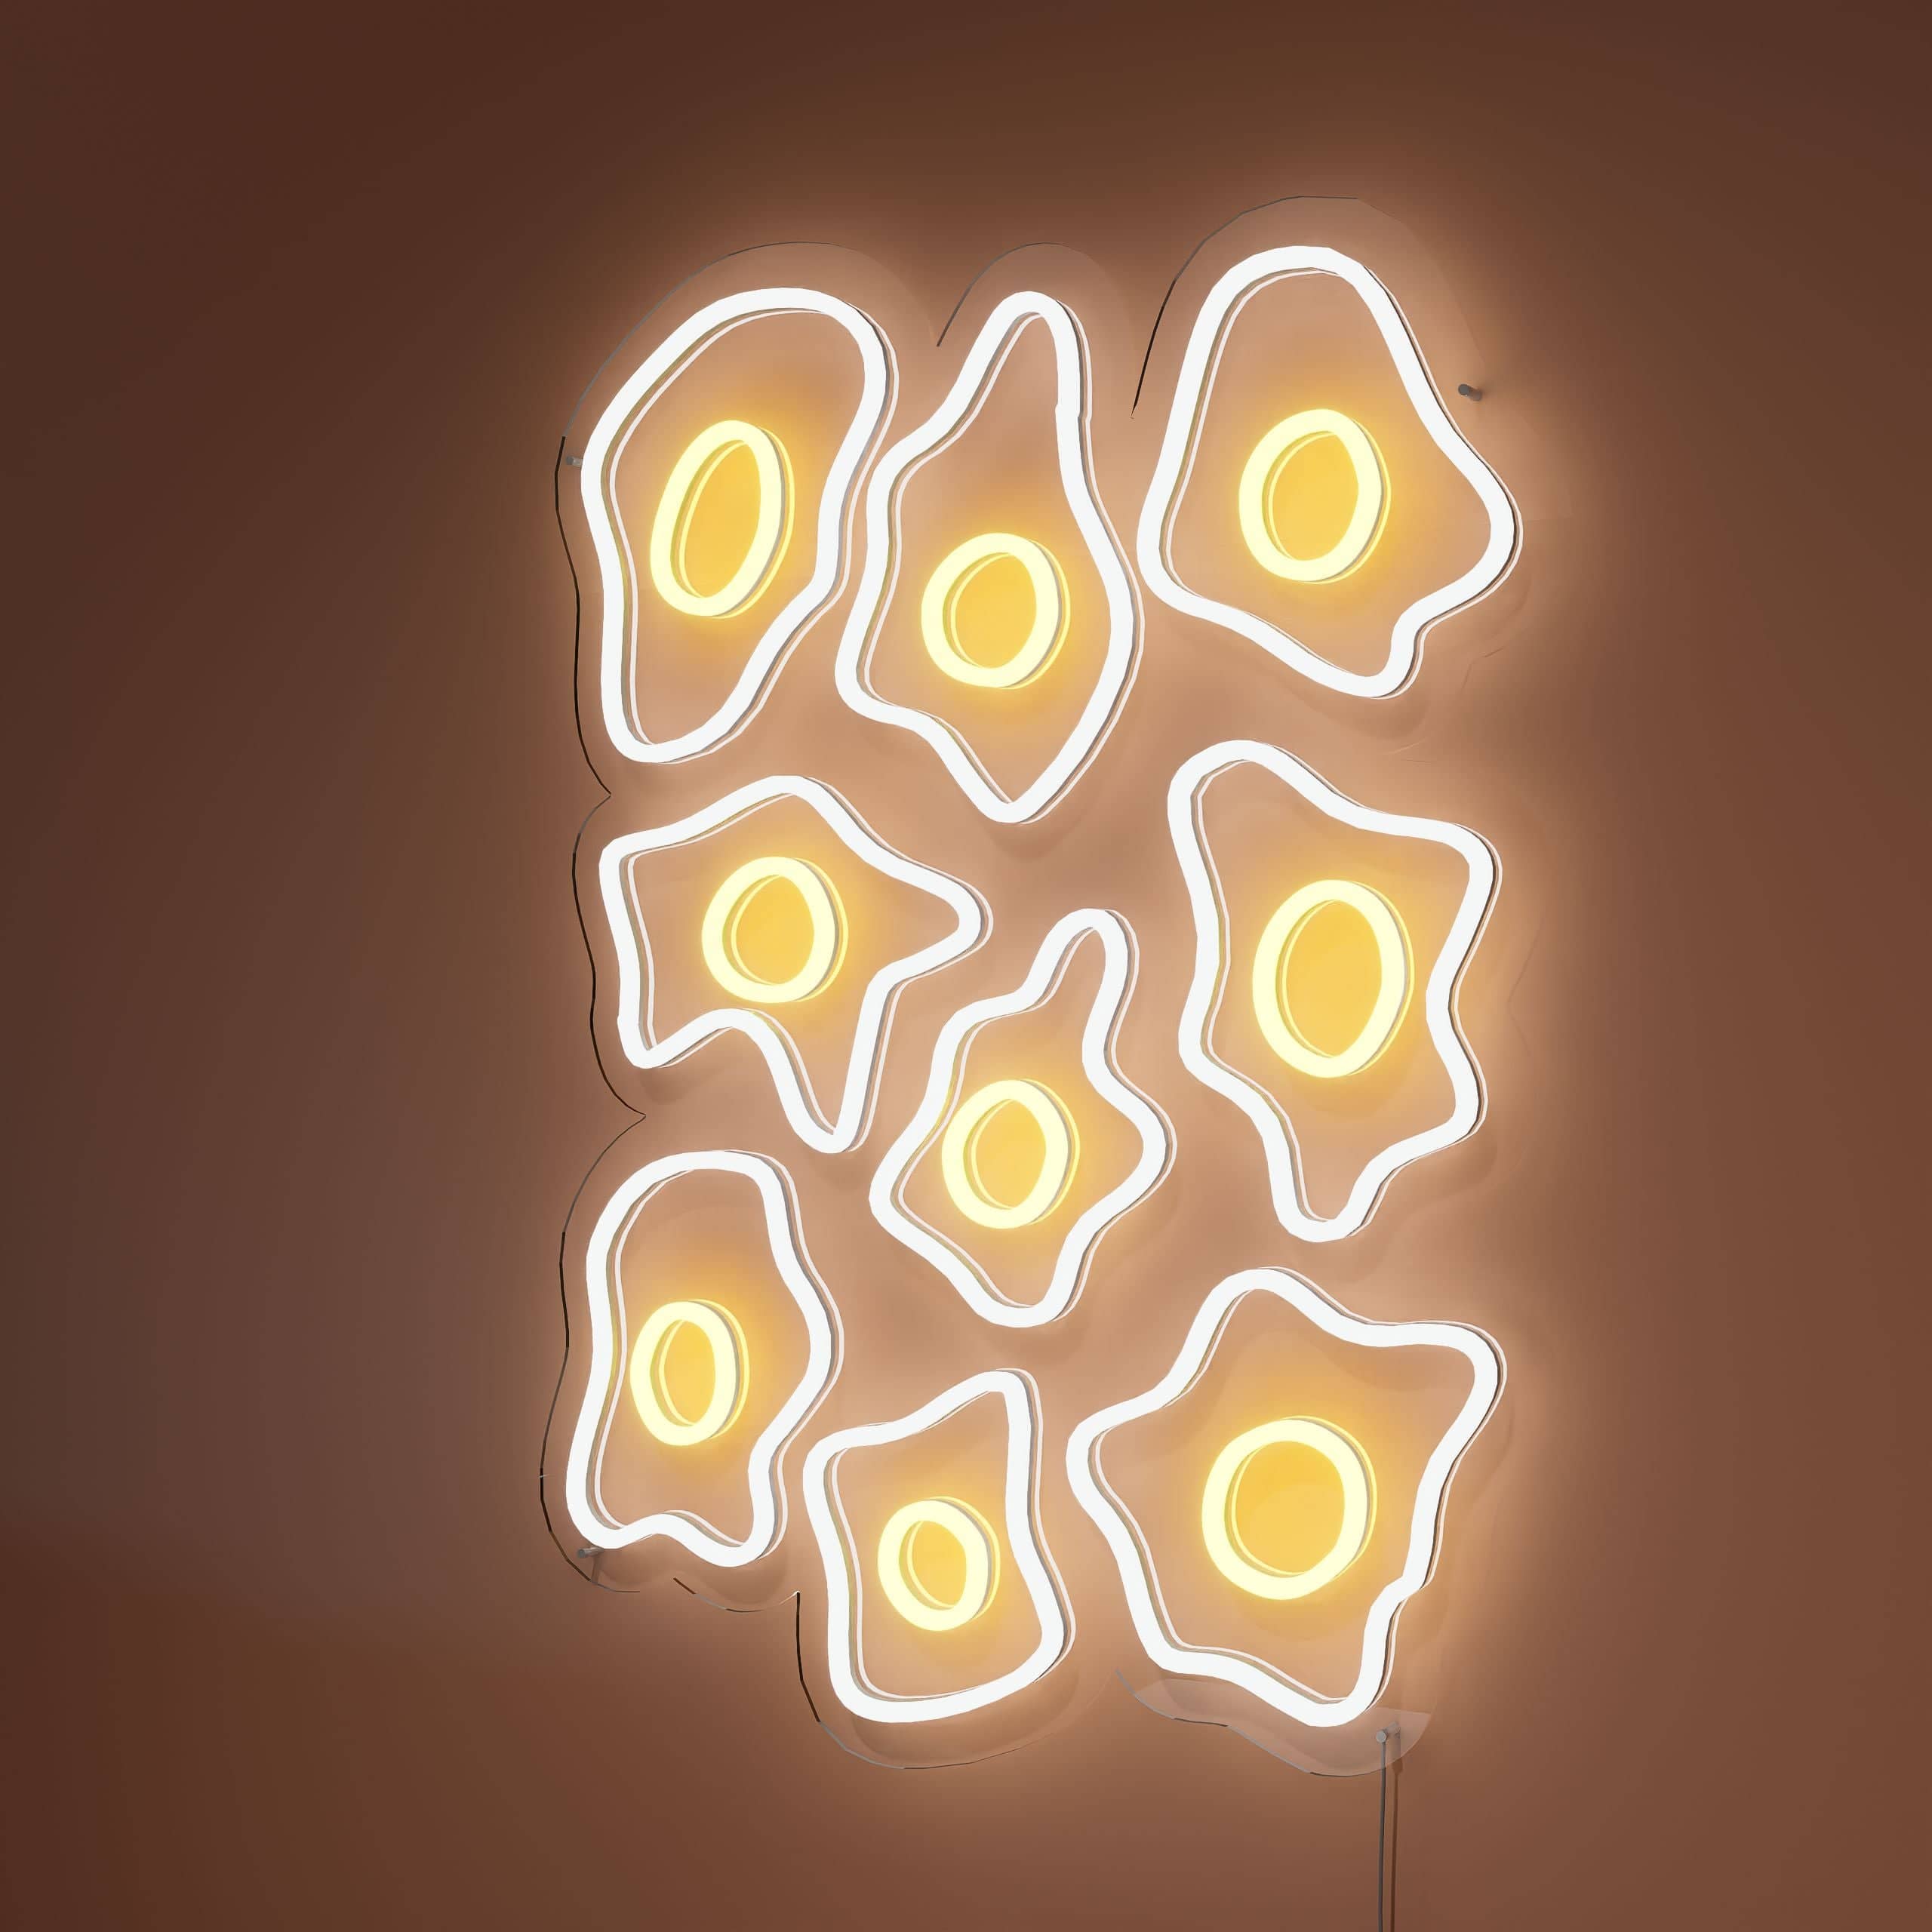 egg-extravaganza-neon-sign-lite